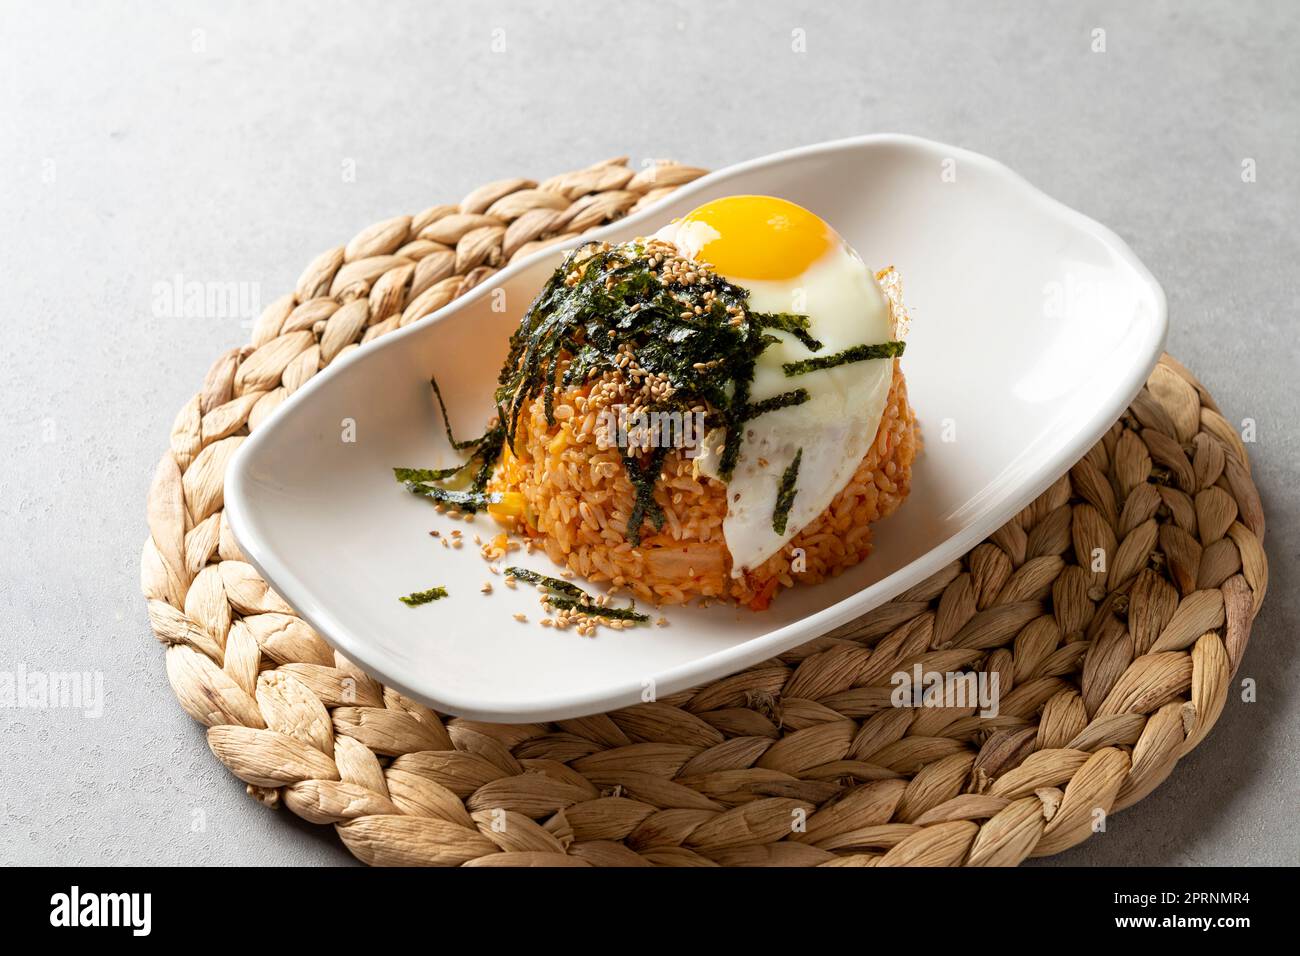 Premium Photo  Topokki or tteokbokki is stir-fried rice cake with